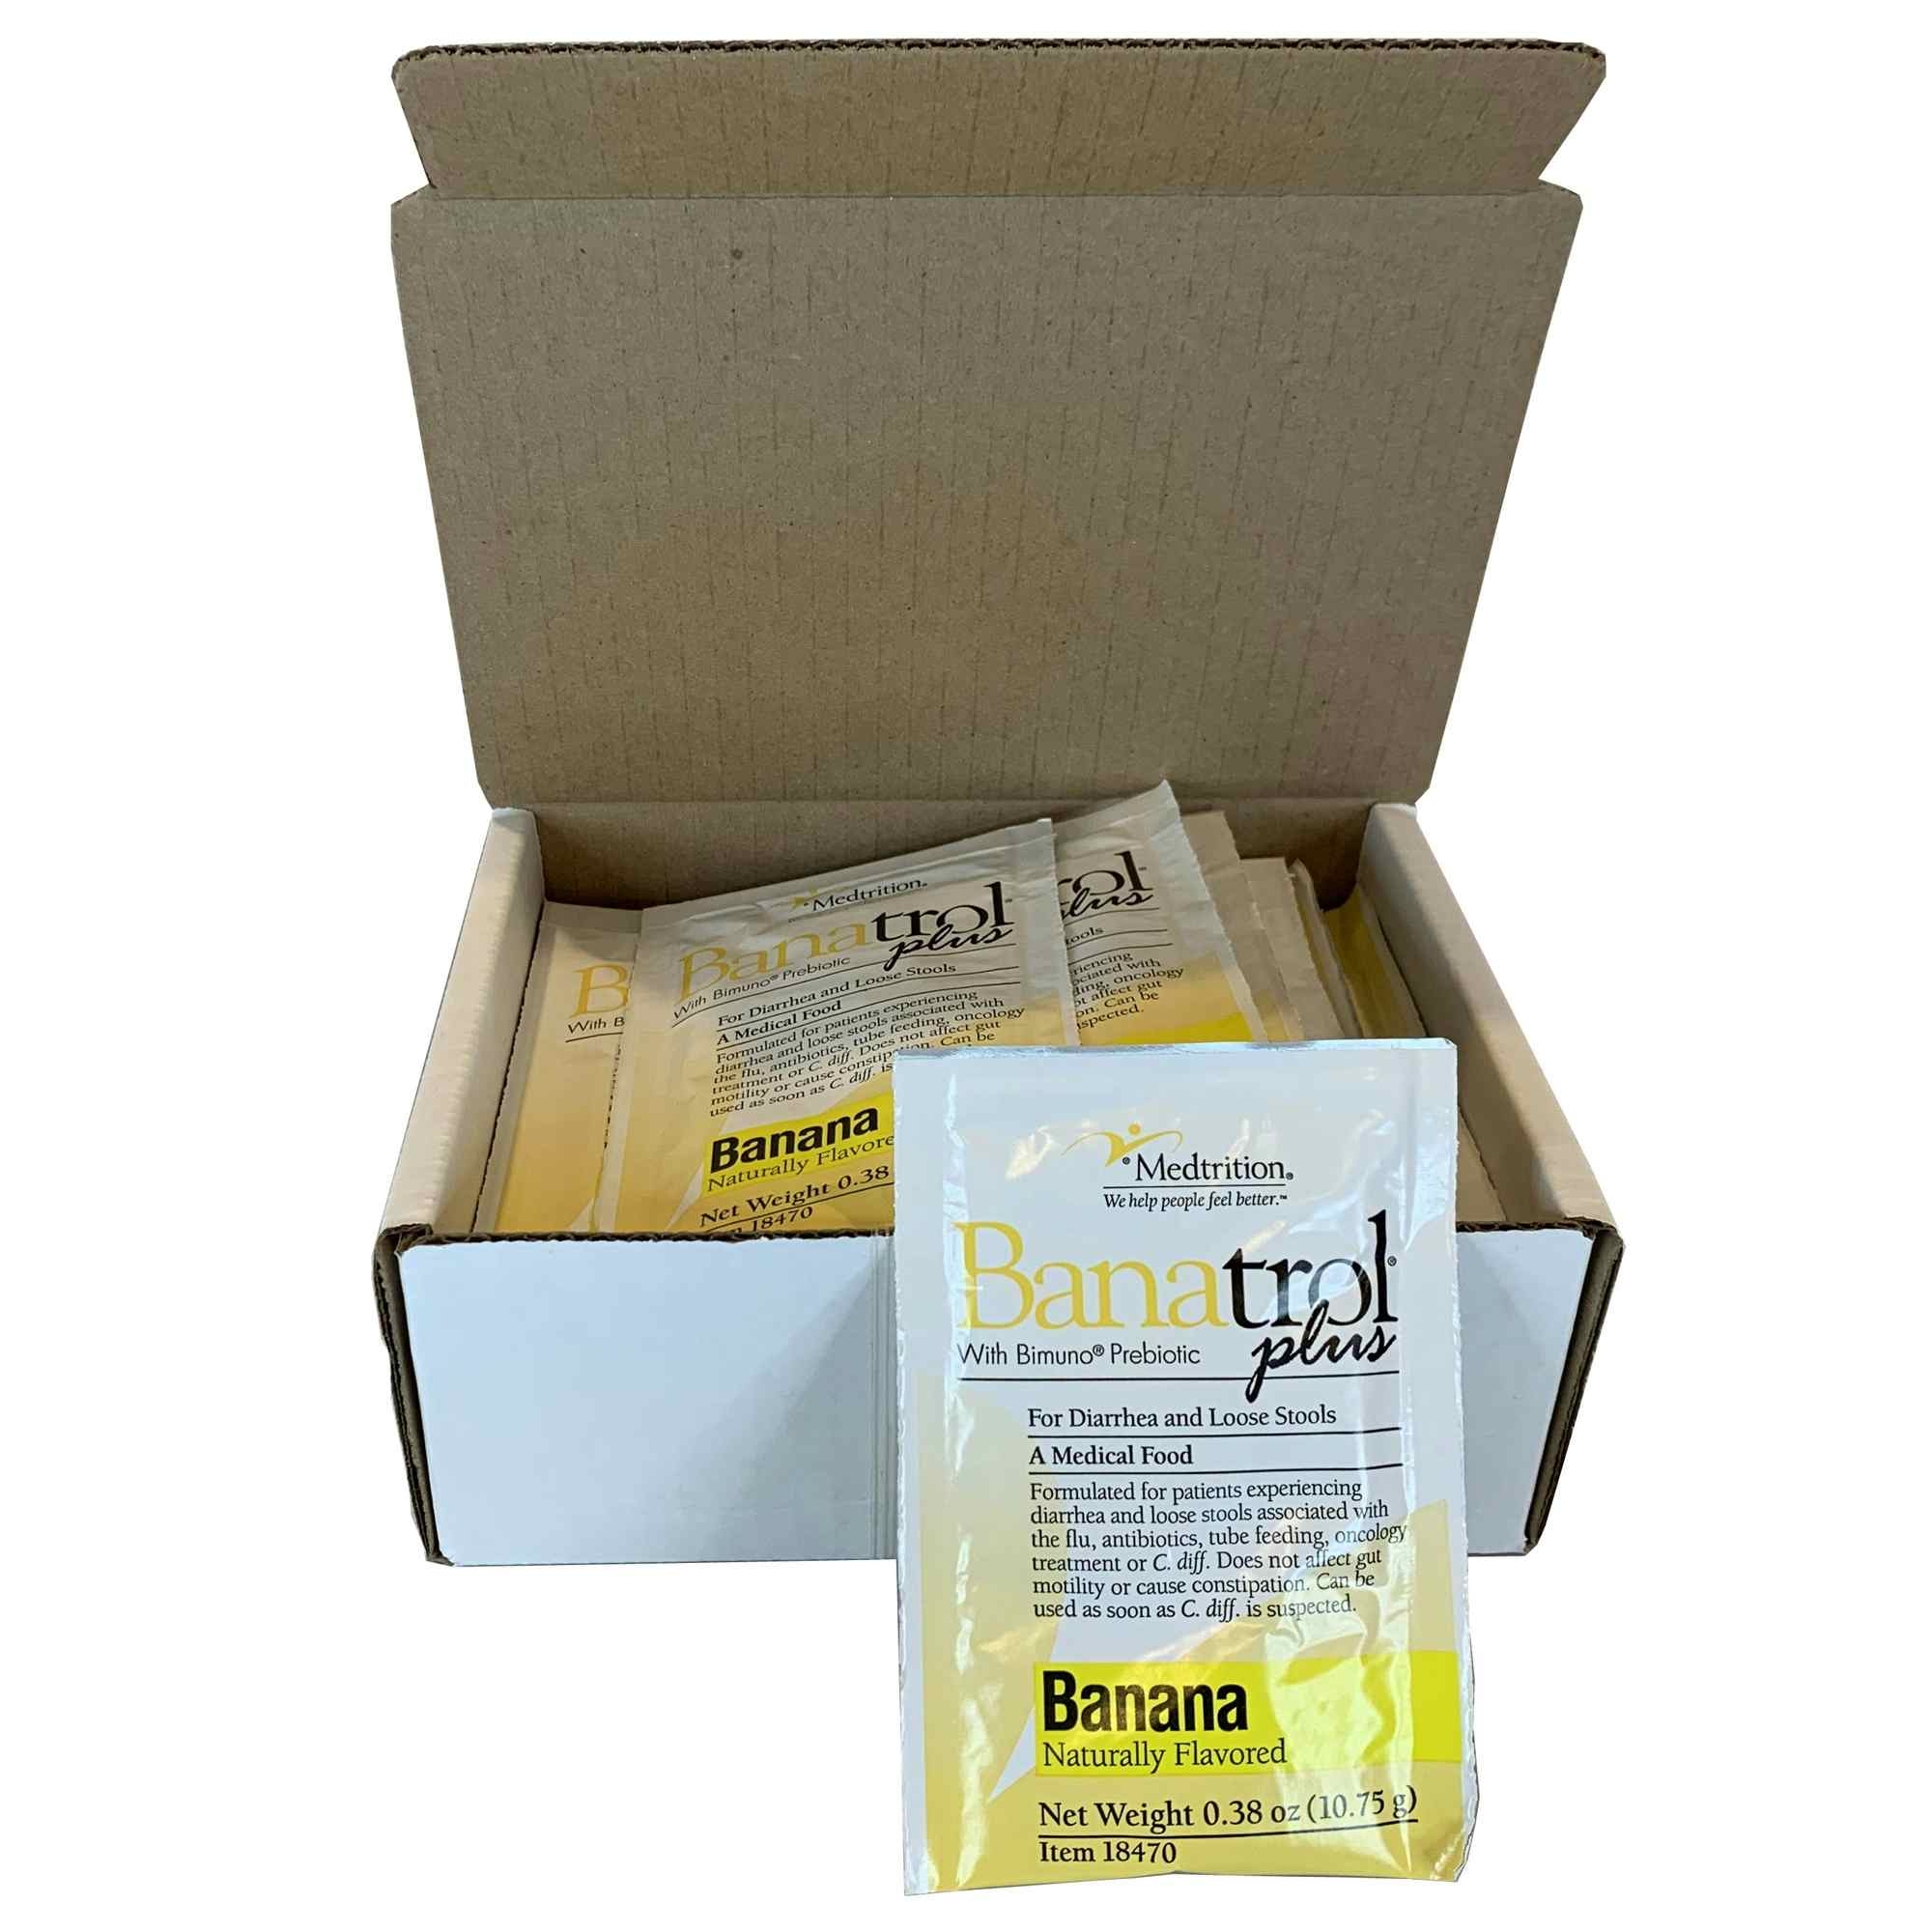 Banatrol Plus Diarrhea Treatment with Bimuno Prebiotic